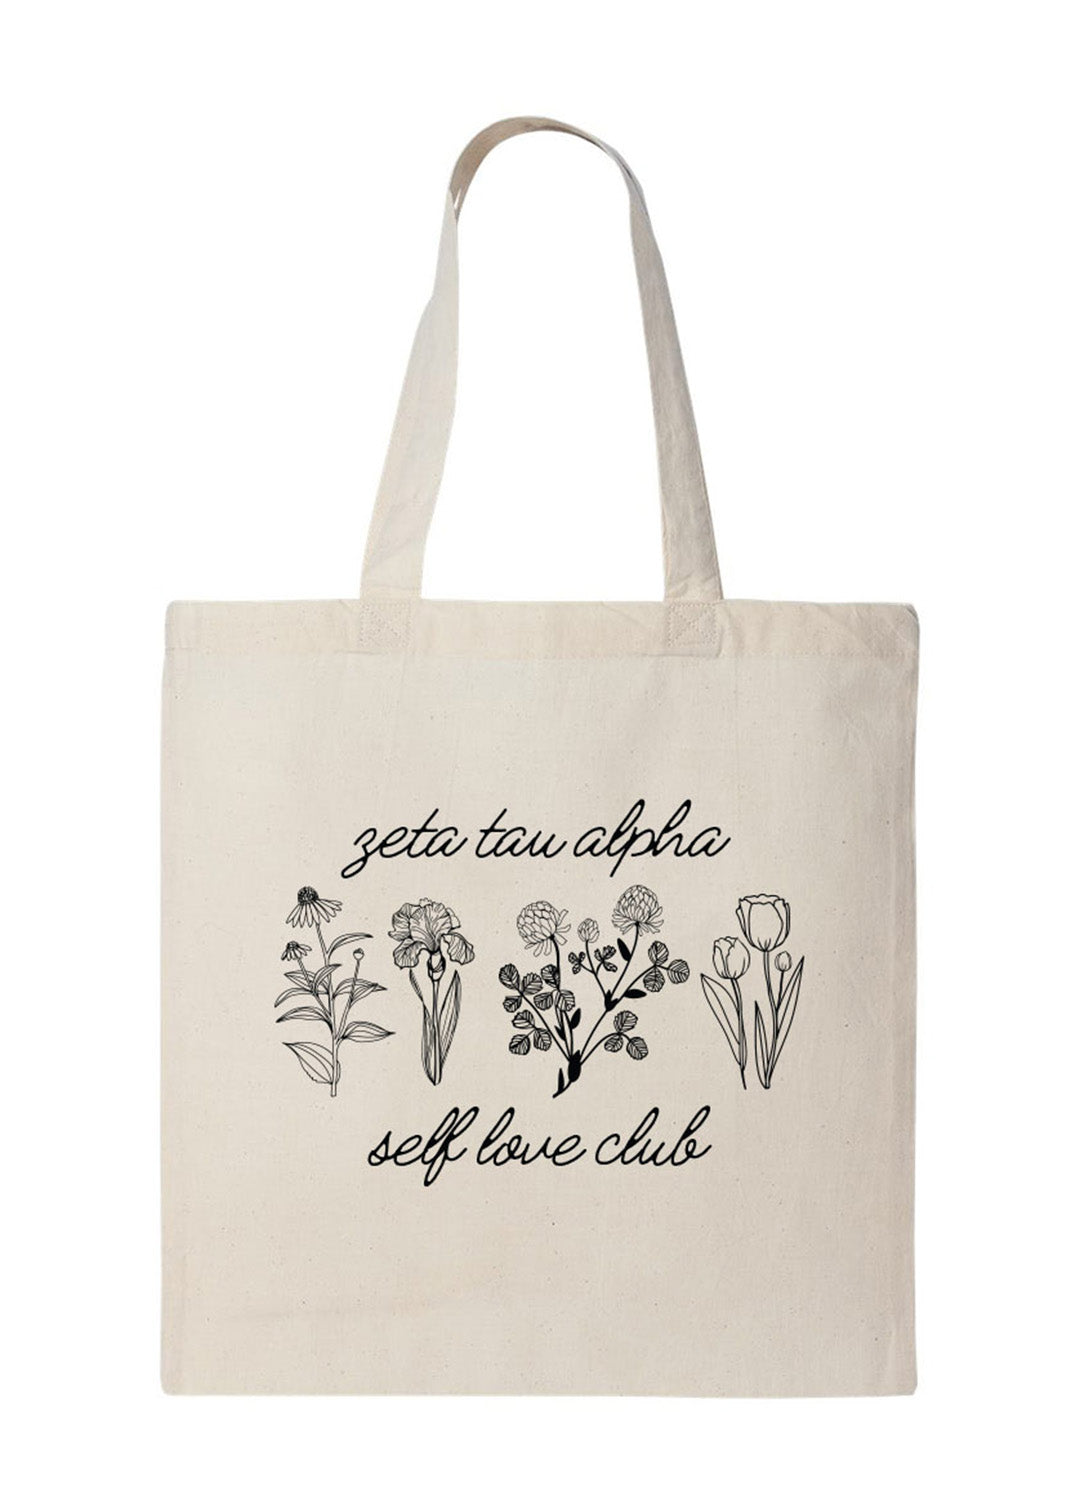 Self Love Club Tote Bag